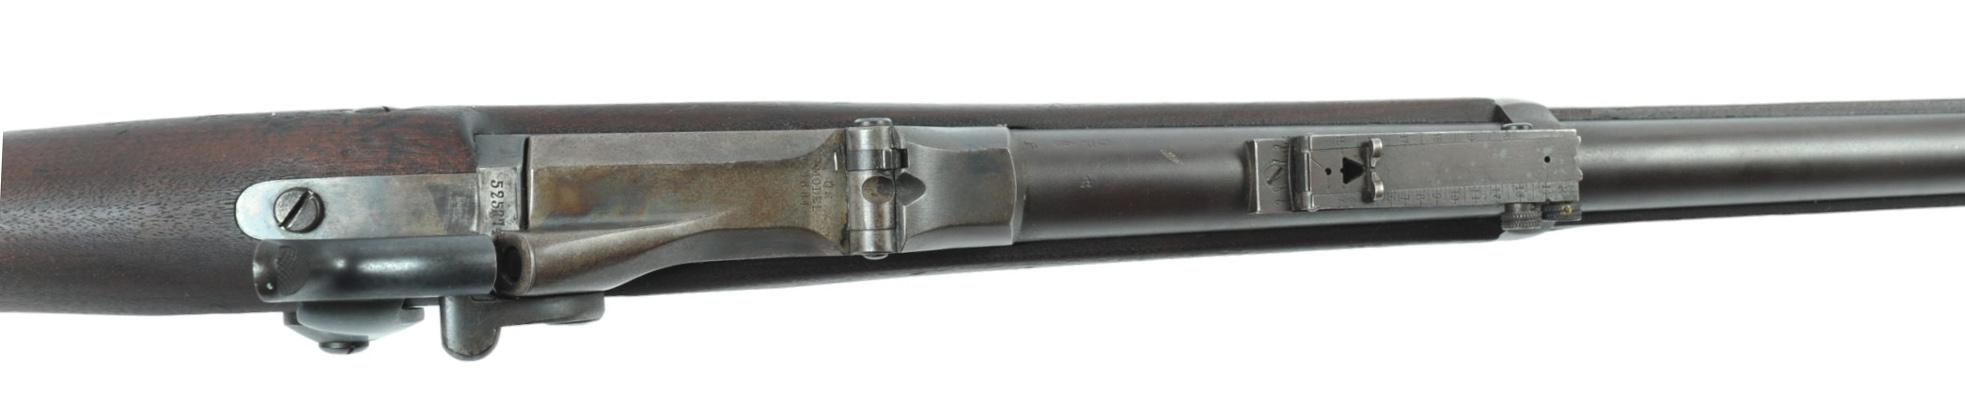 Springfield Model 1888 45-70 Trapdoor Rifle No FFL Required  (VDM1)